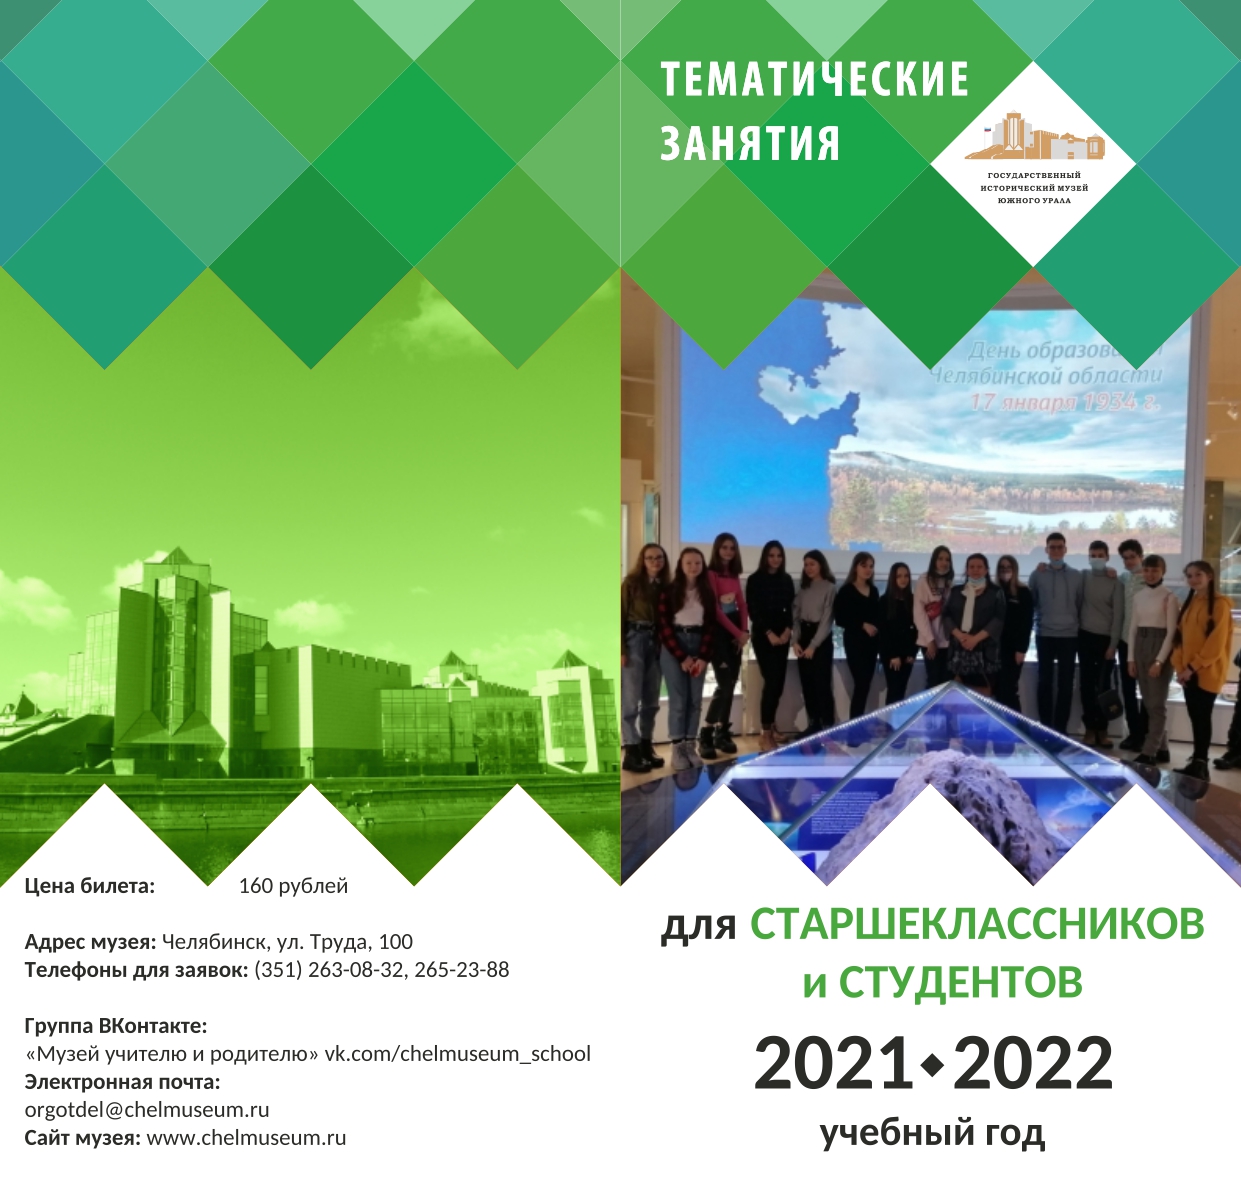 Buklet_tematicheskie_zanyatia_2021-2022_page-0005.jpg